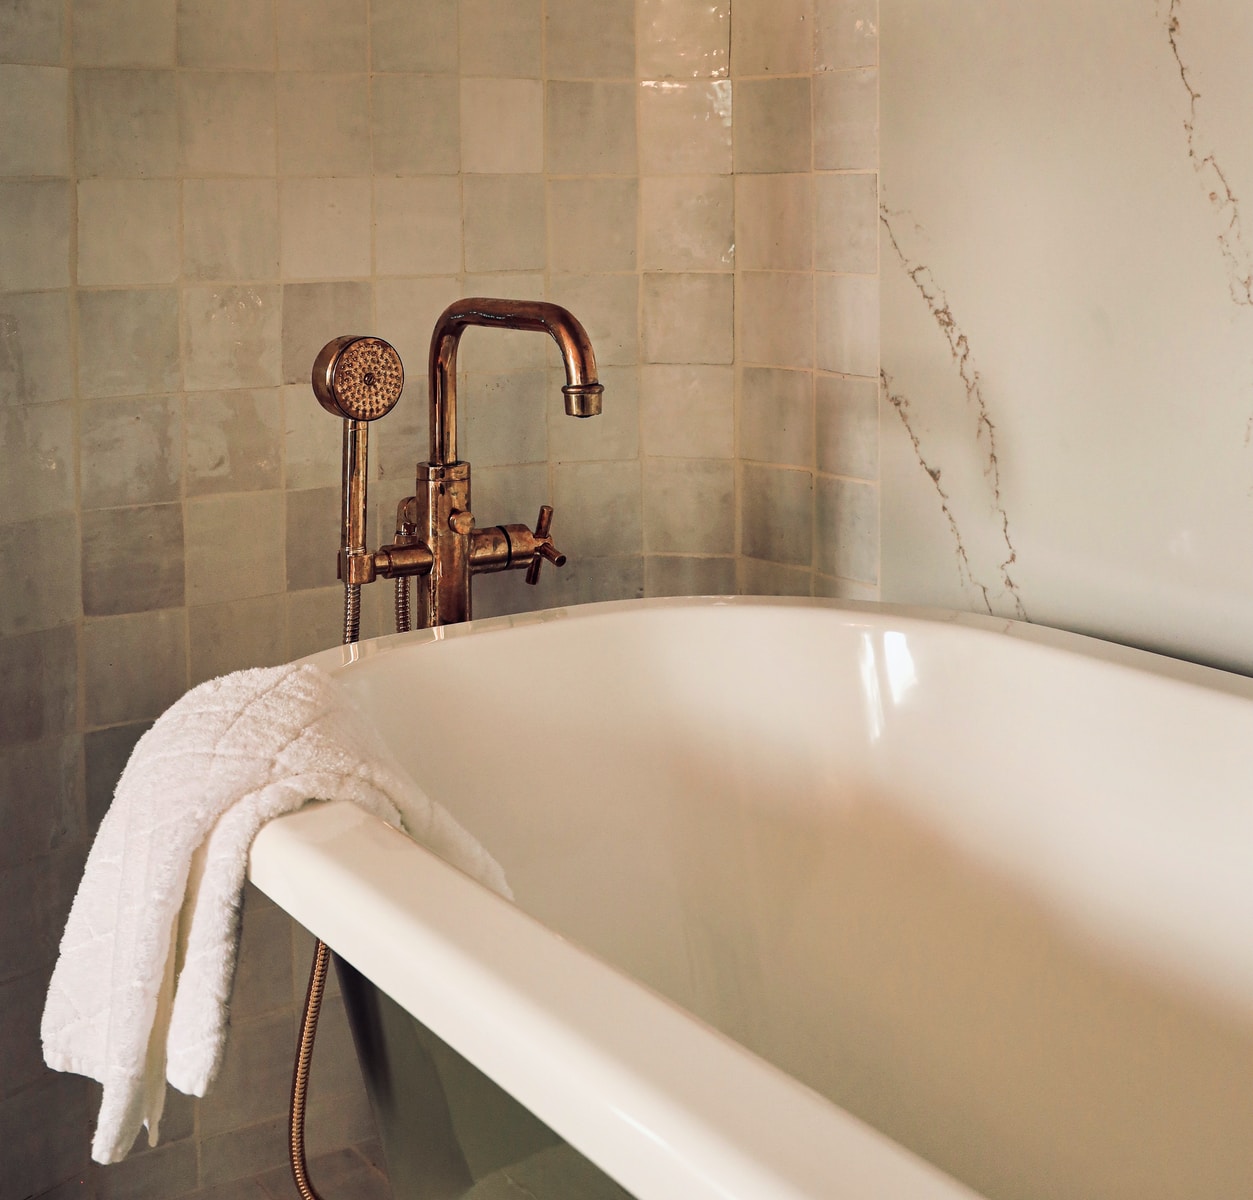 Bath Cushion white ceramic bathtub with stainless steel shower head